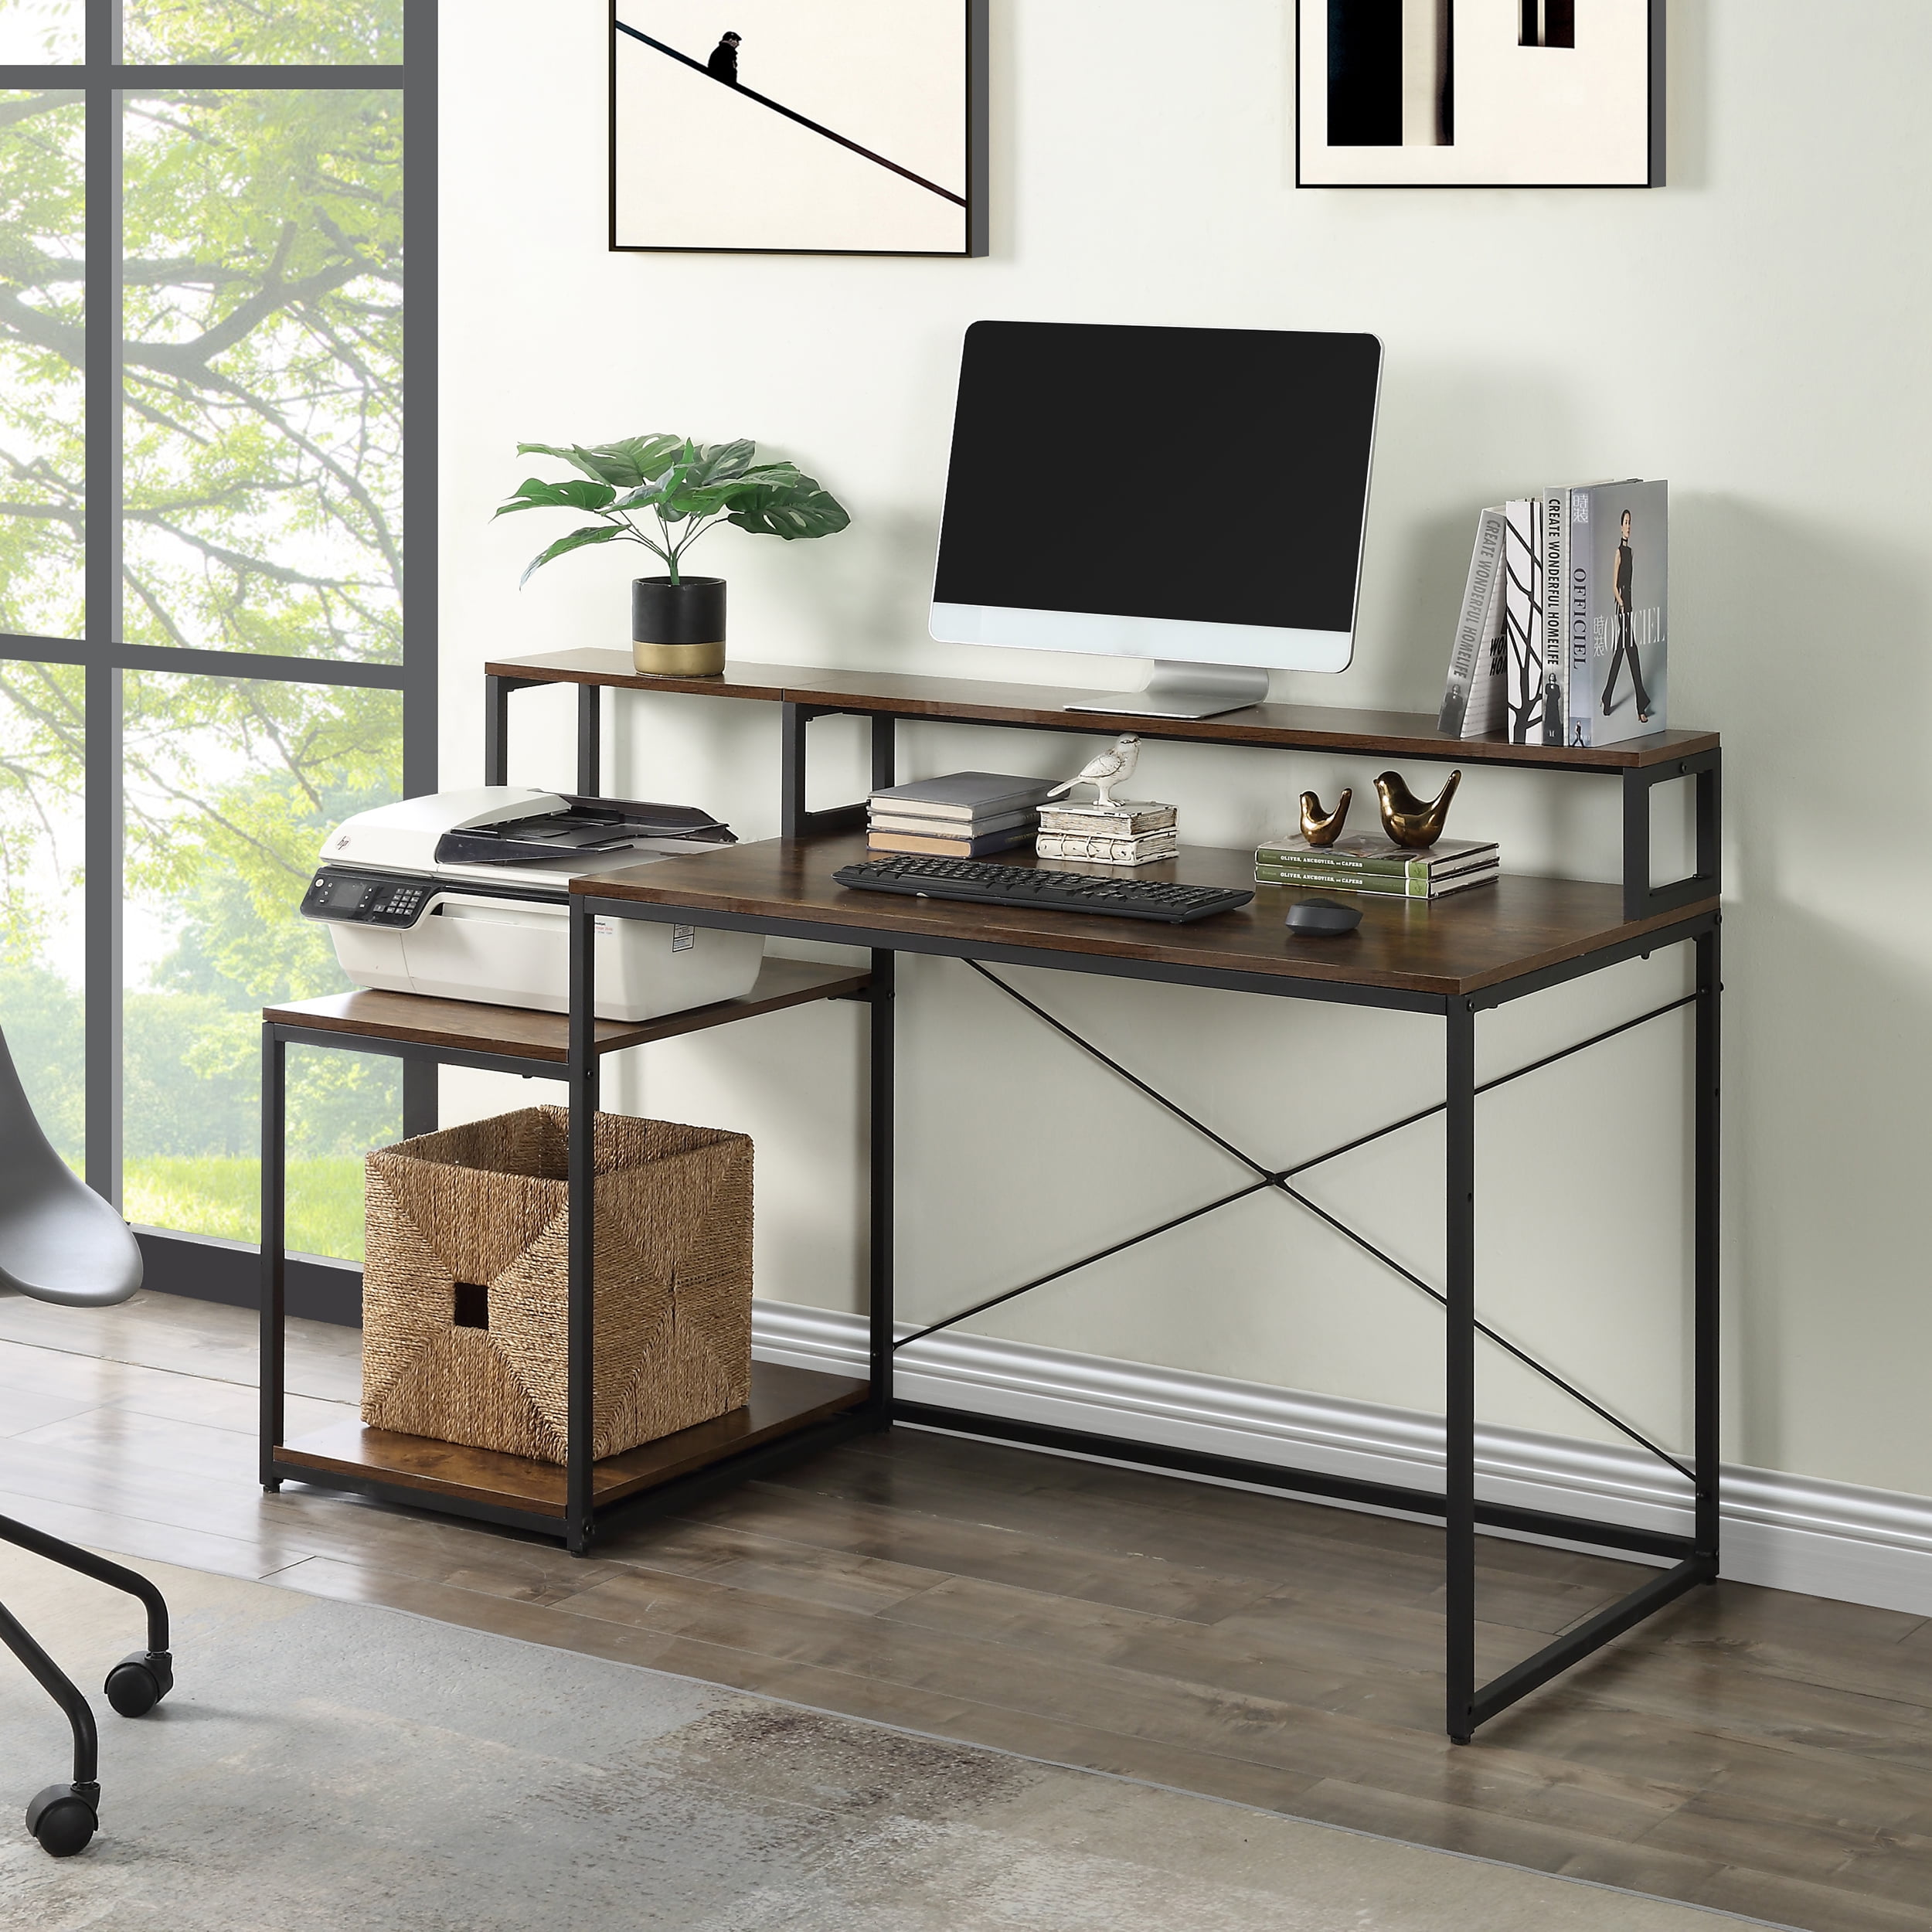 Details about   Folding Computer Desk PC Laptop Table WorkStation Home Office Furniture W/ Shelf 